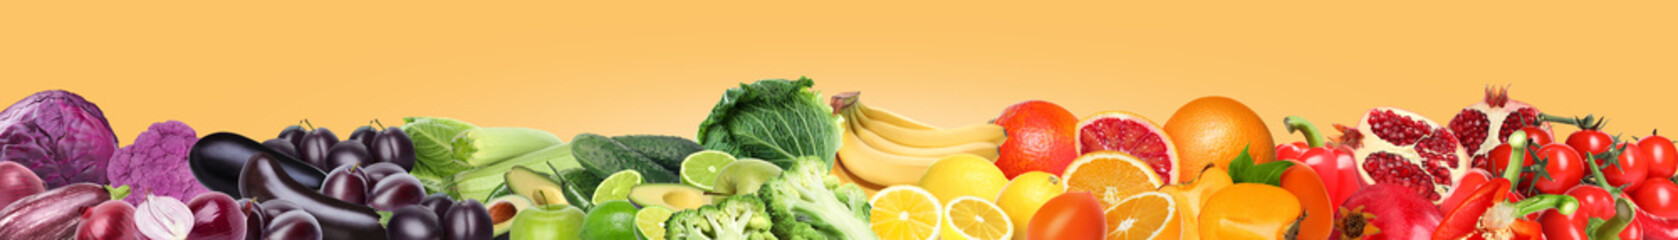 Many different fresh fruits and vegetables on pale orange background. Banner design